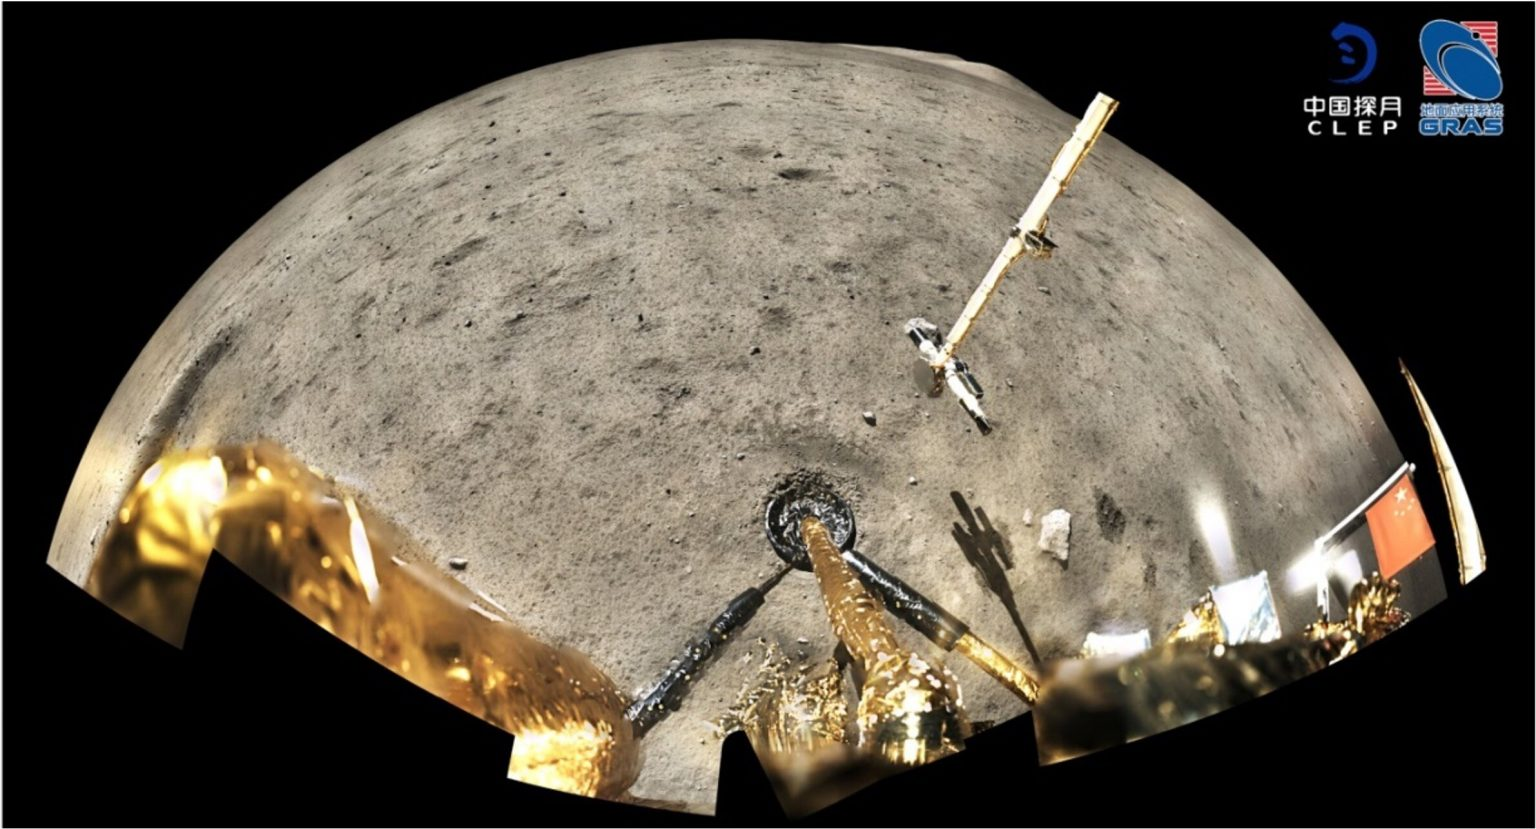 Panoramska slika koju je uslikao Chang’e-5 nakon uzimanja uzoraka (©CNSA (China National Space Administration) / CLEP (China Lunar Exploration Program) / GRAS (Ground Research Application System)).